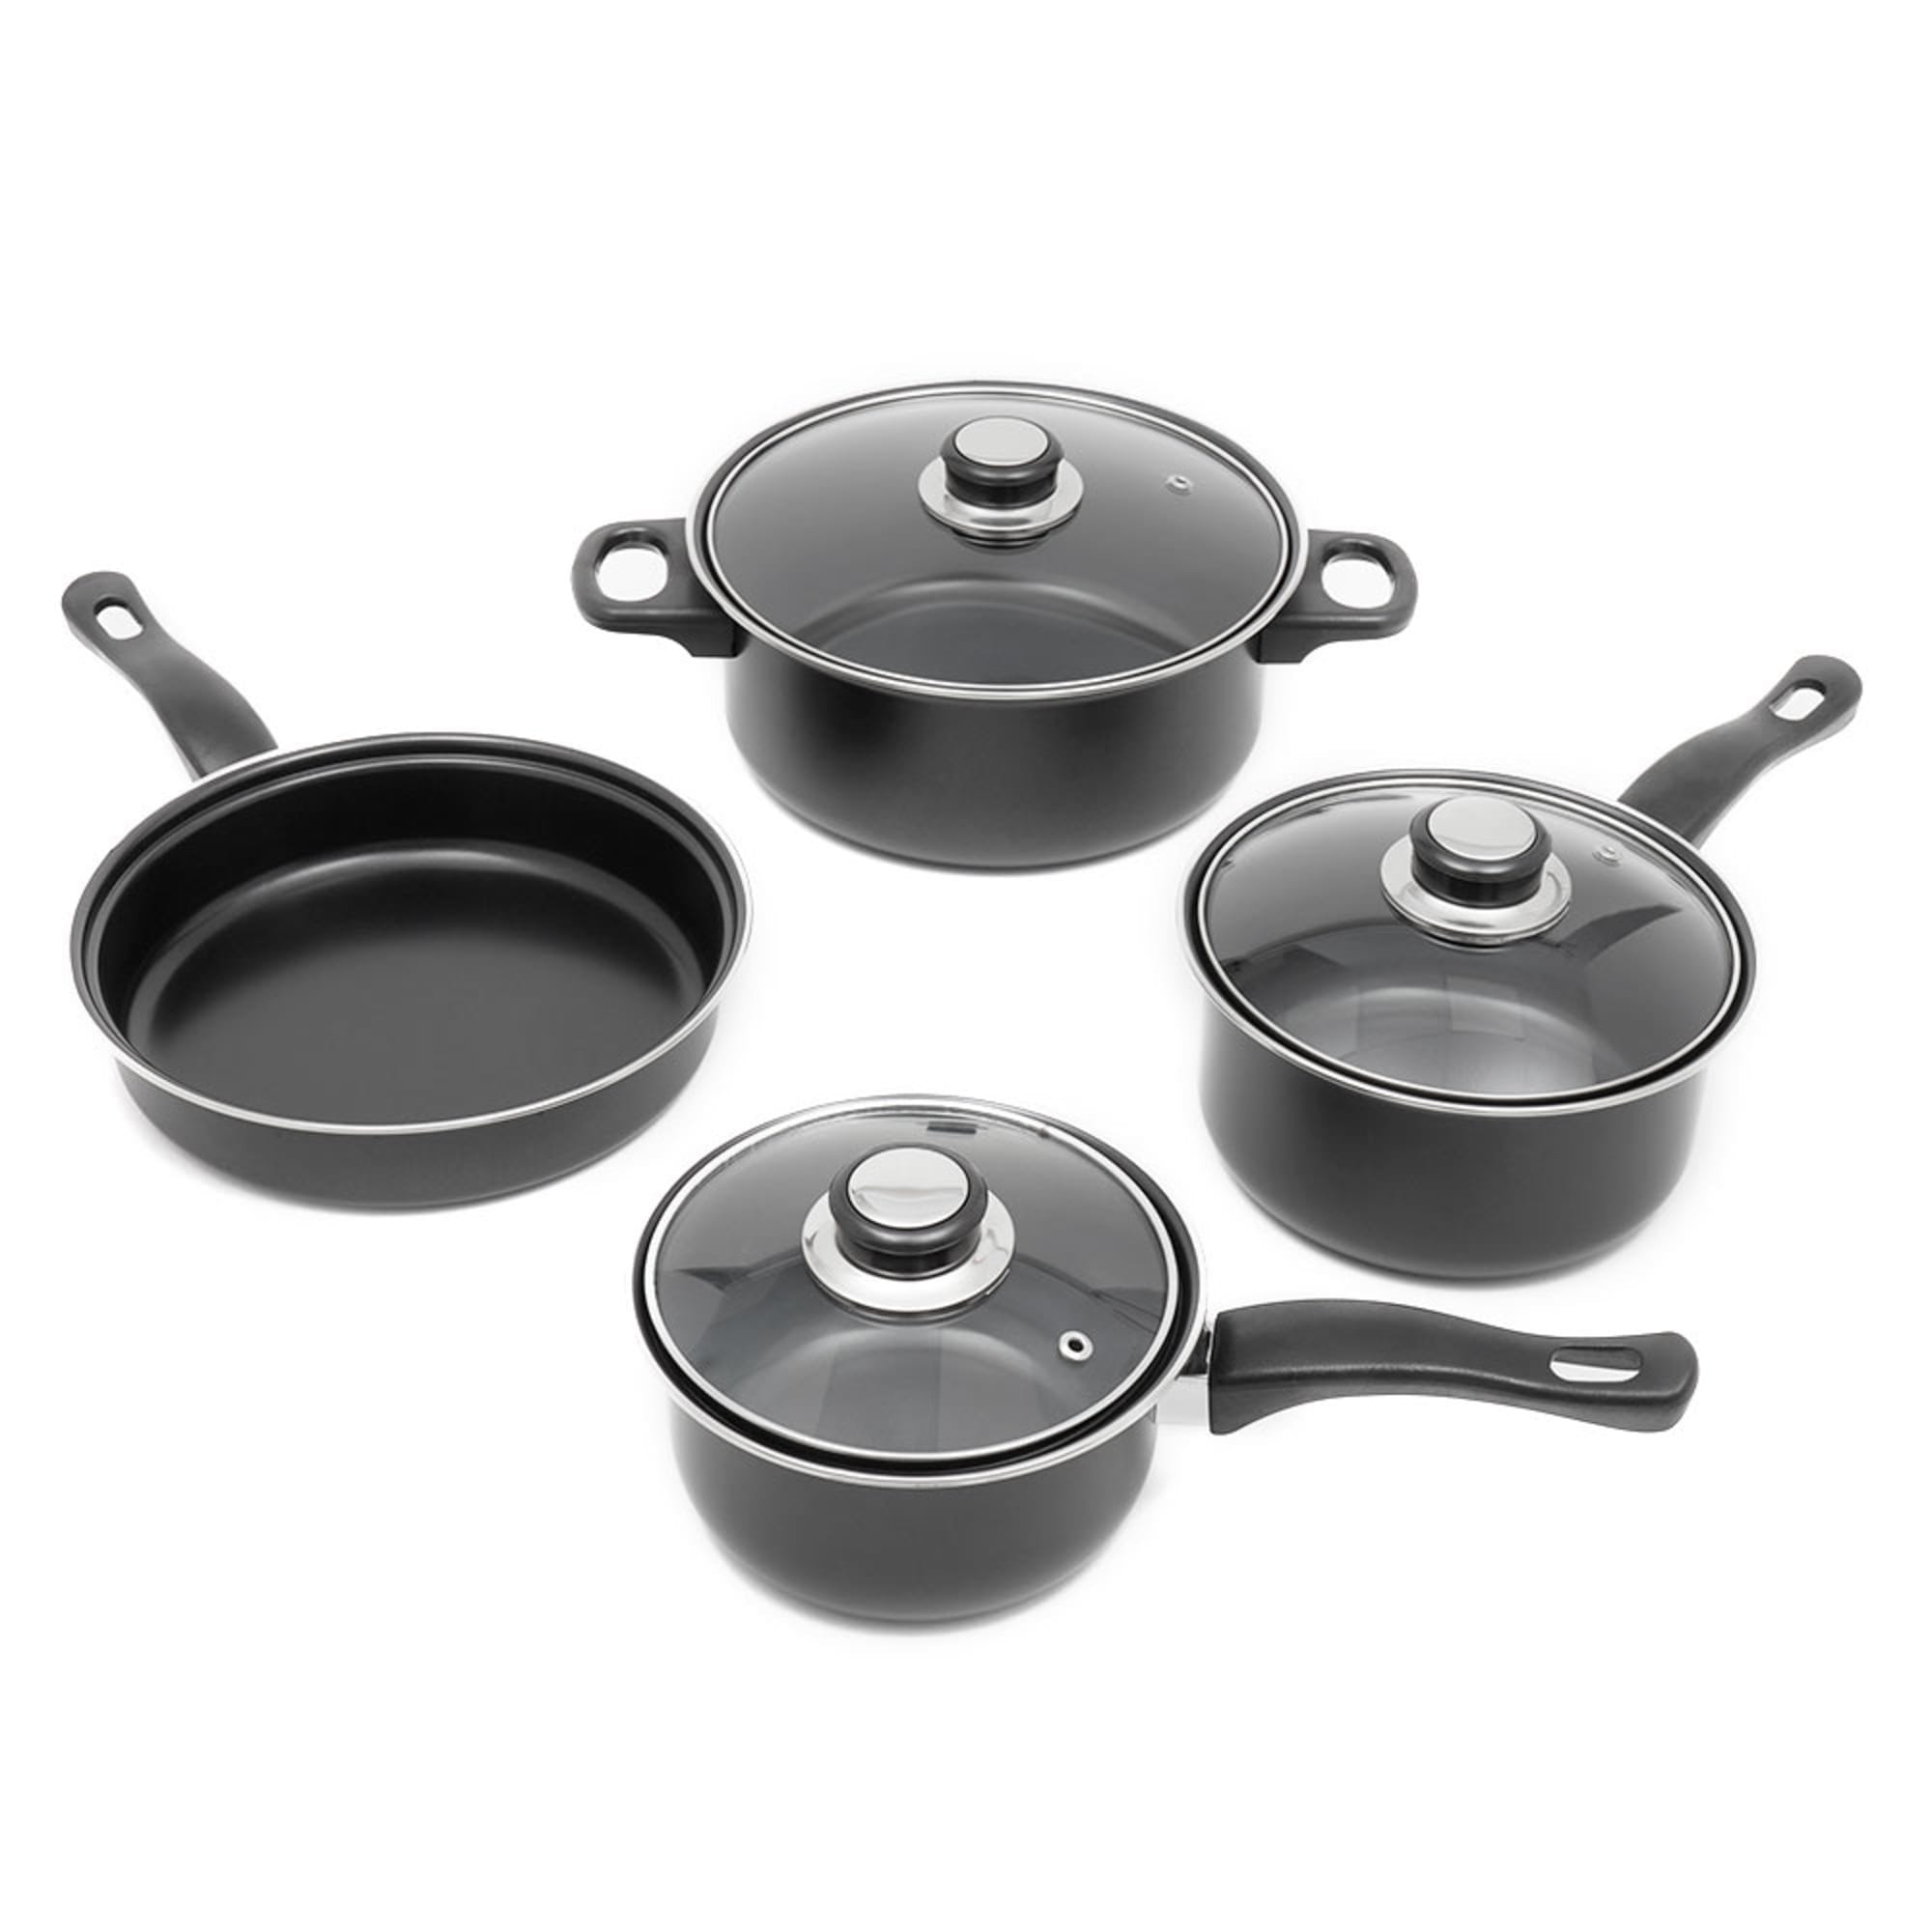 7 Piece Carbon Steel Cookware 